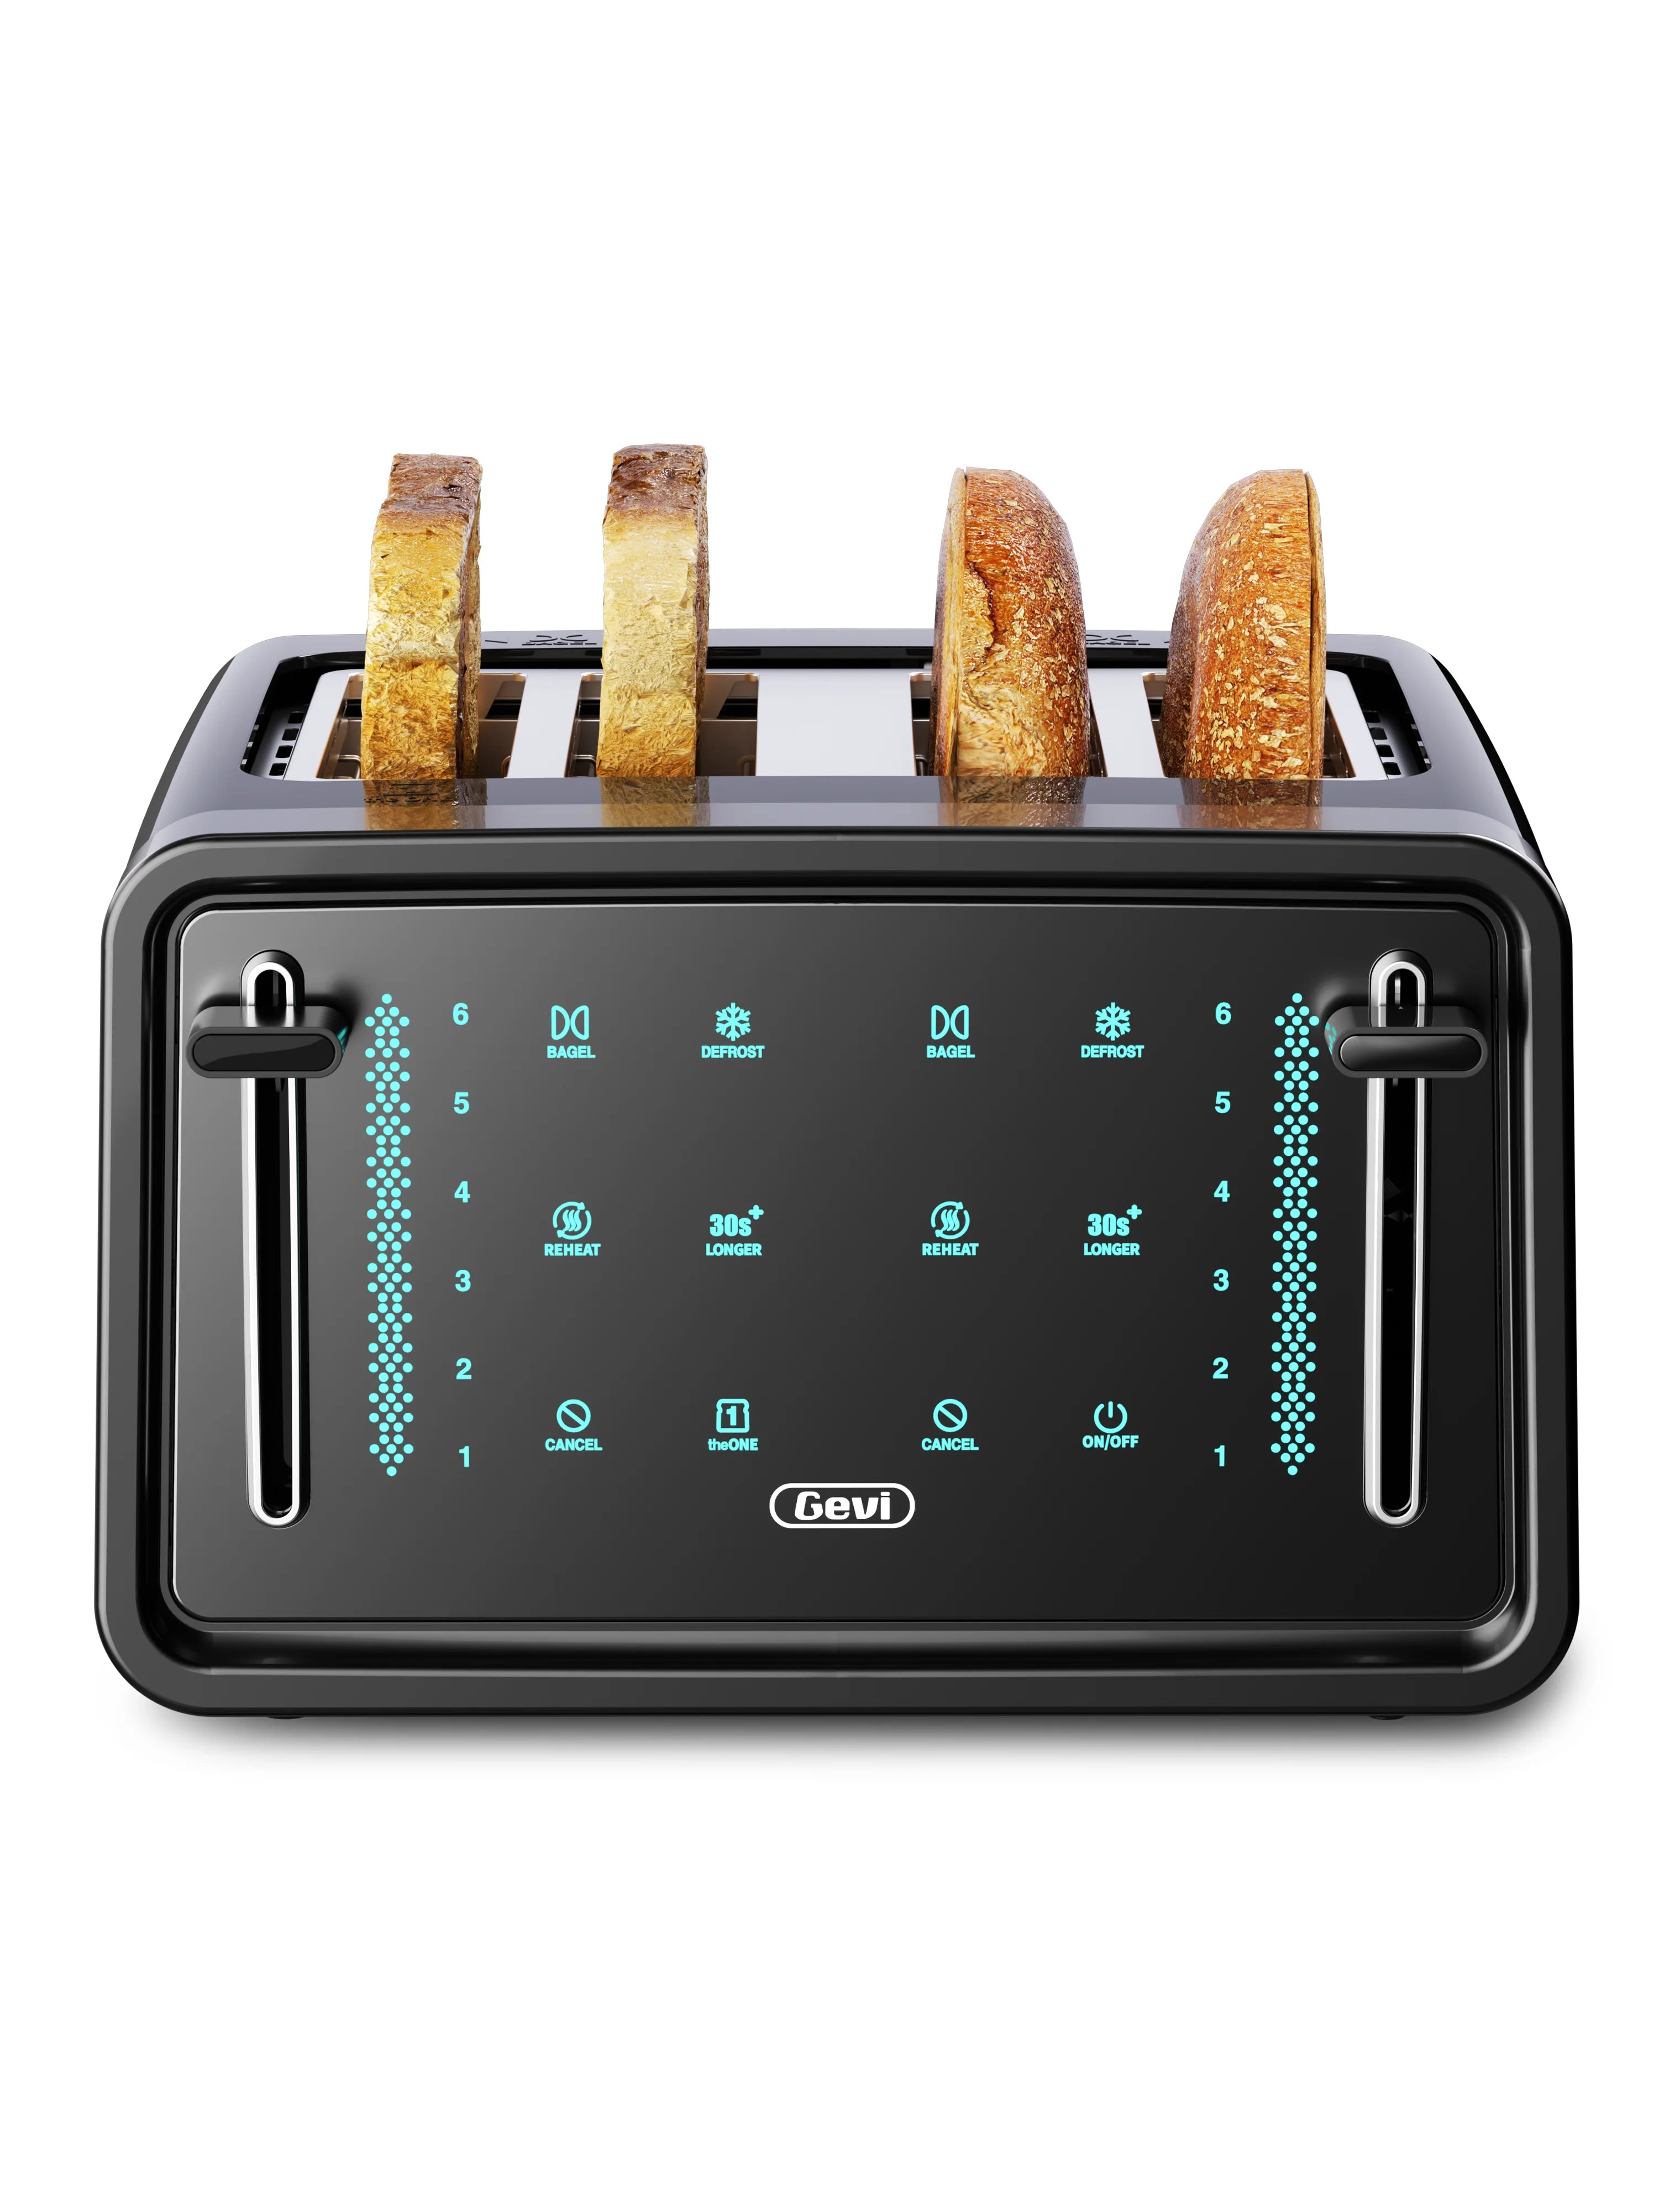 2 Slice Black Bread Toaster Toasting Breakfast Small Kitchen Appliances 6  Shades